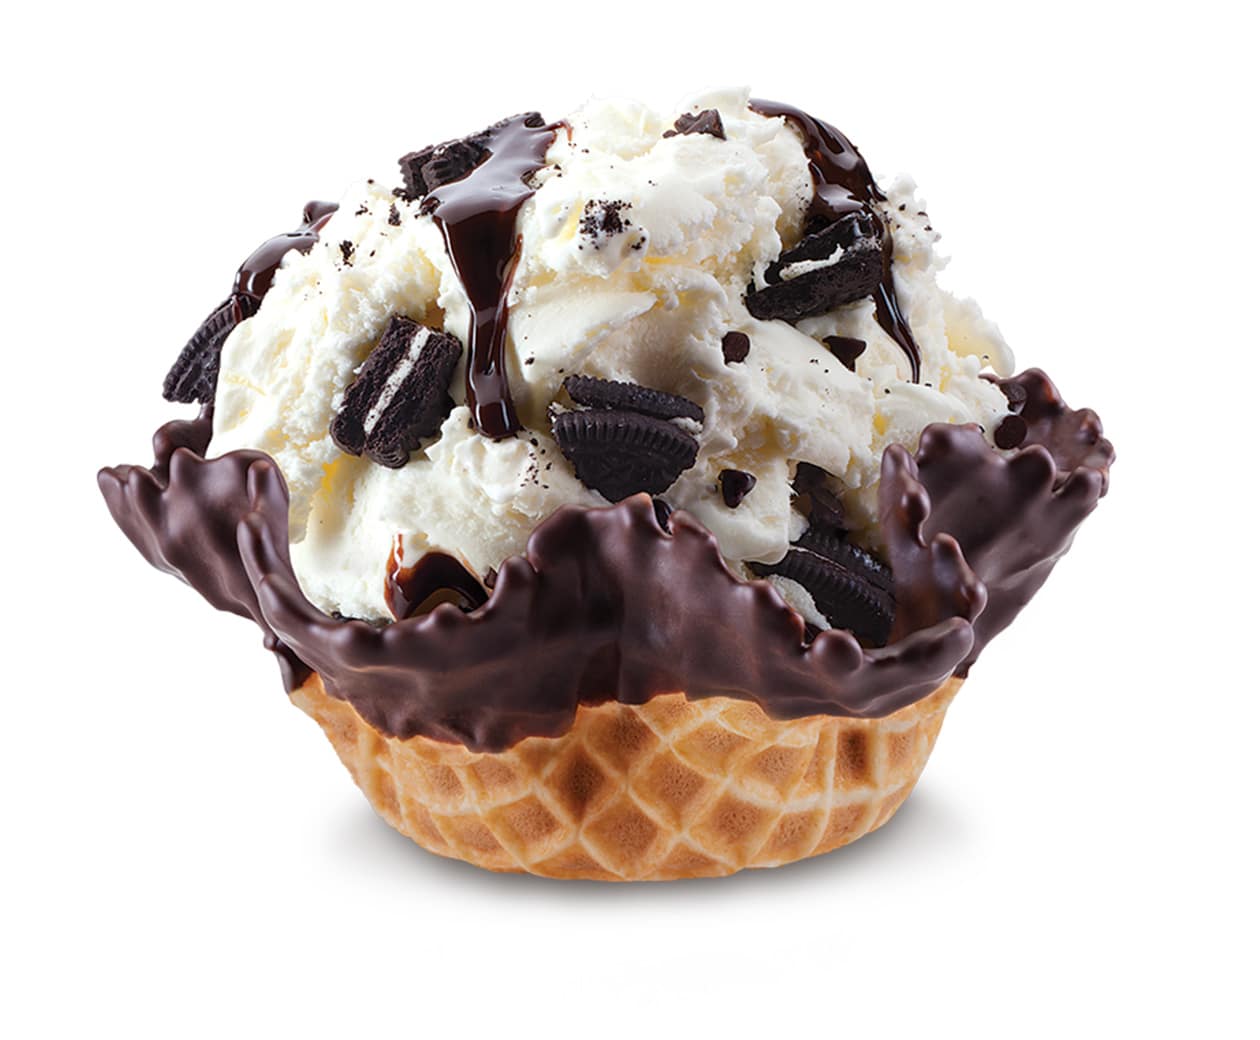 Oreo Cream Ice Cream (Like It) from Cold Stone Creamery ...